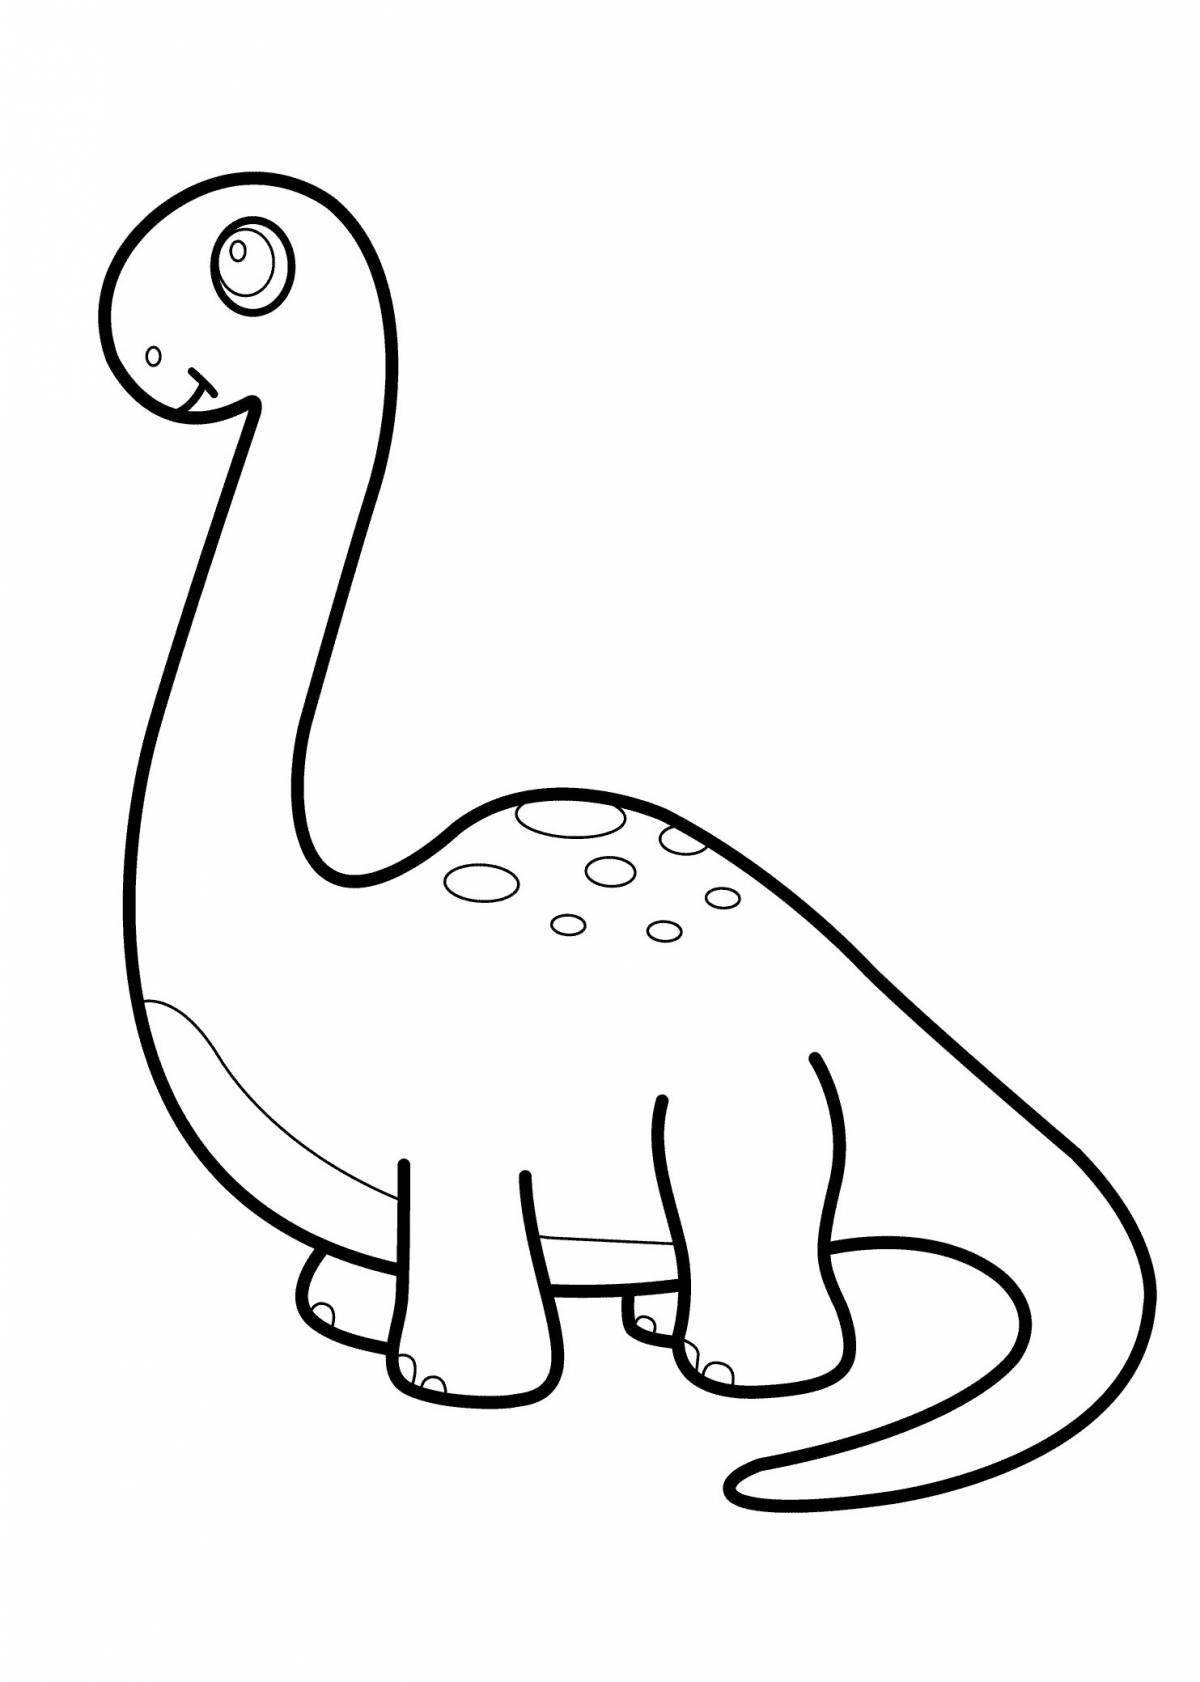 Joyful brontosaurus coloring book